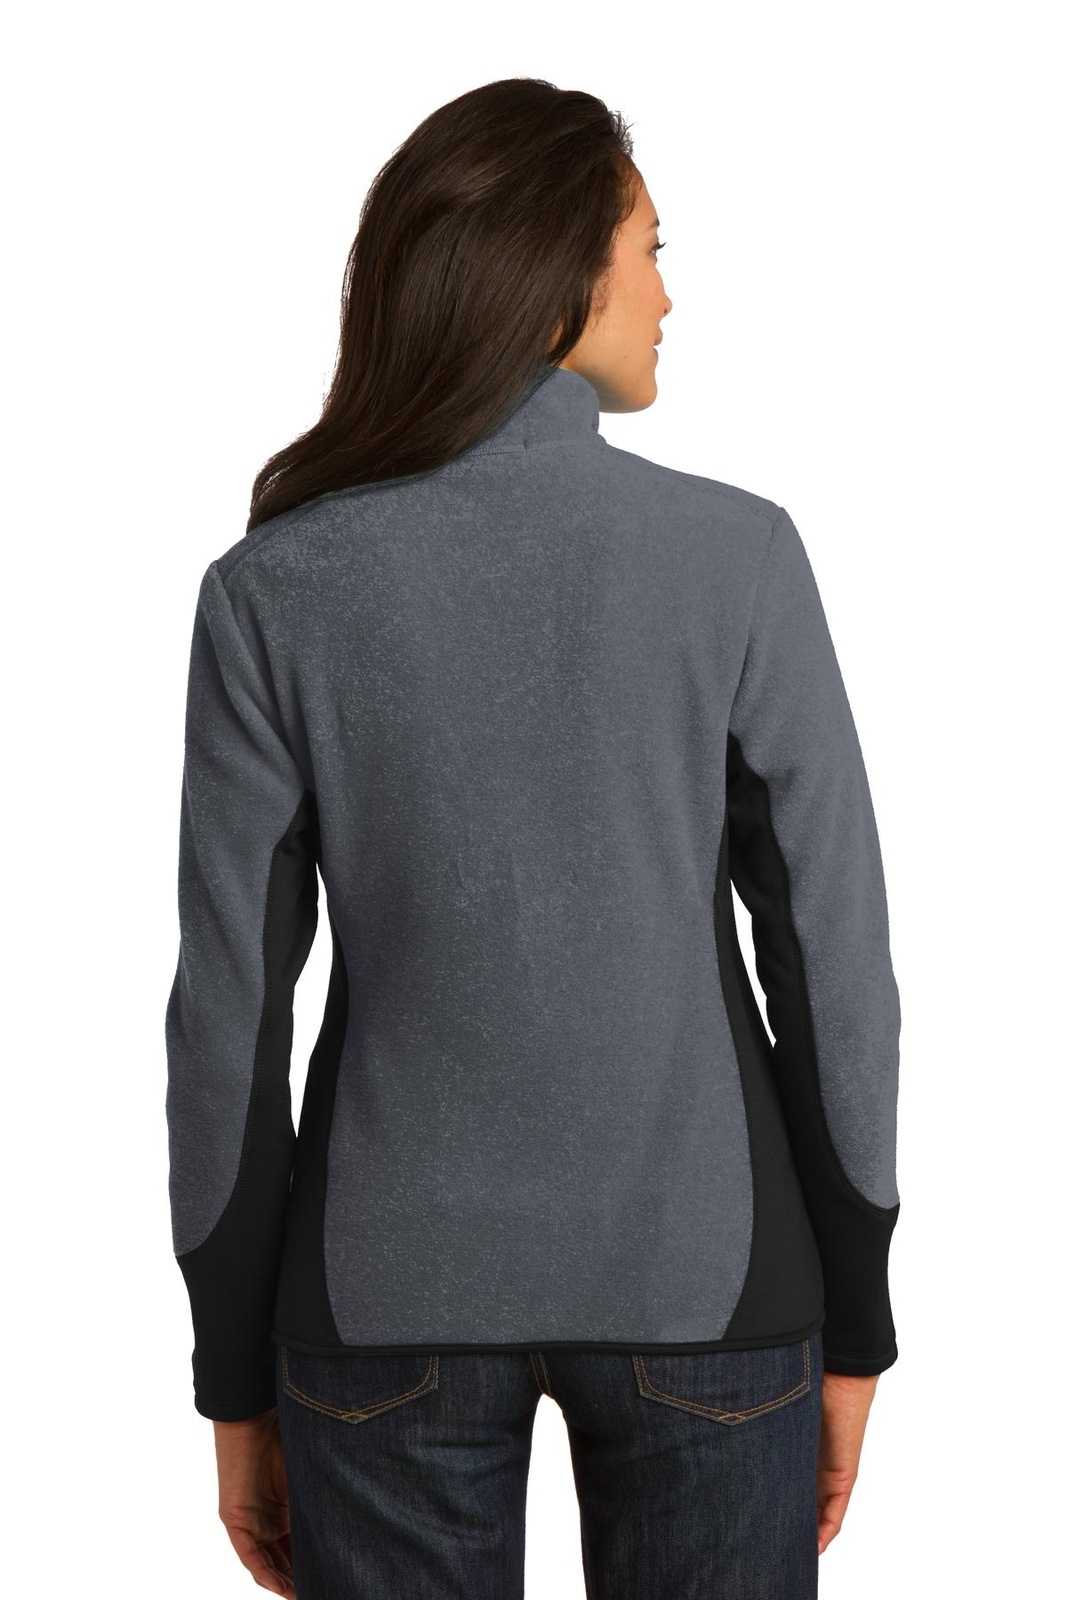 Port Authority L227 Ladies R-Tek Pro Fleece Full-Zip Jacket - Charcoal Heather Black - HIT a Double - 1